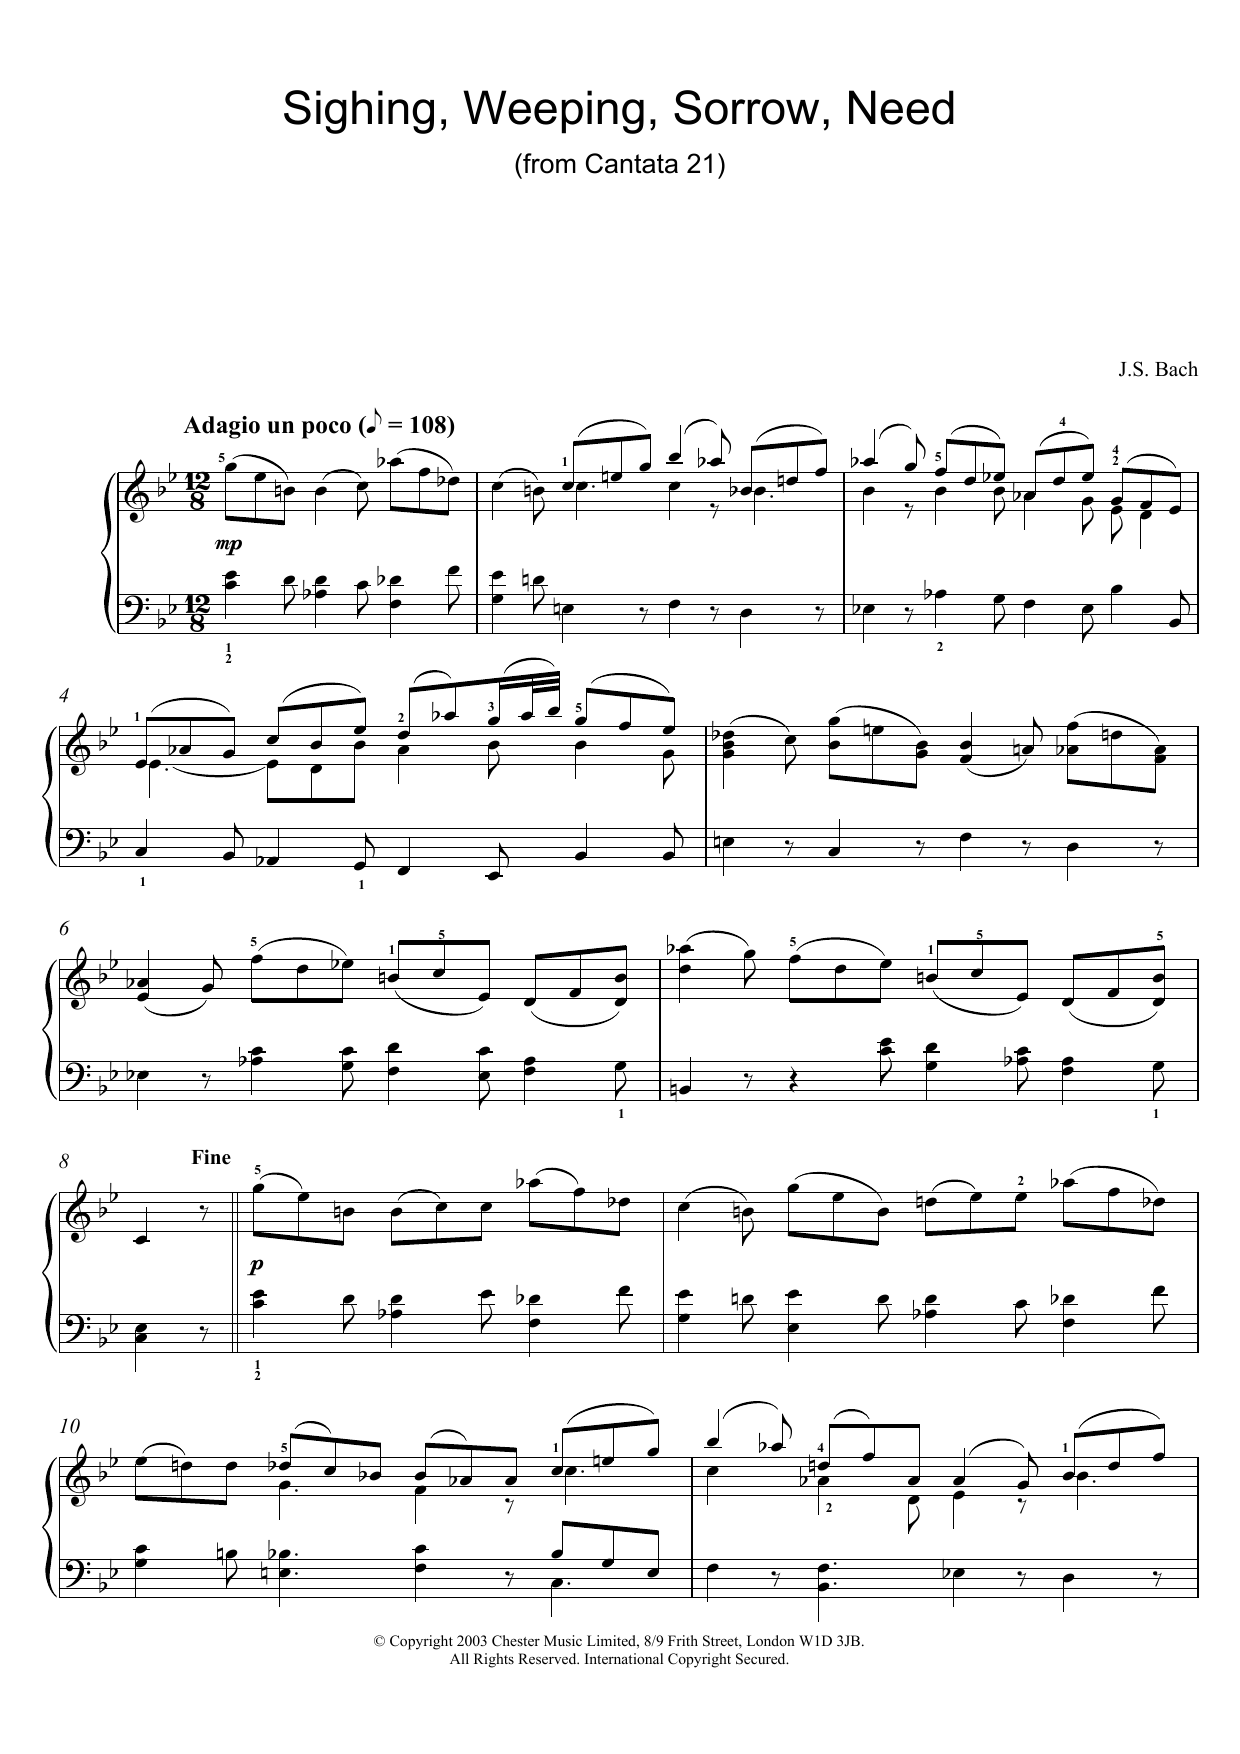 Johann Sebastian Bach Sighing, Weeping, Sorrow, Need (from Cantata 21) Sheet Music Notes & Chords for Piano - Download or Print PDF